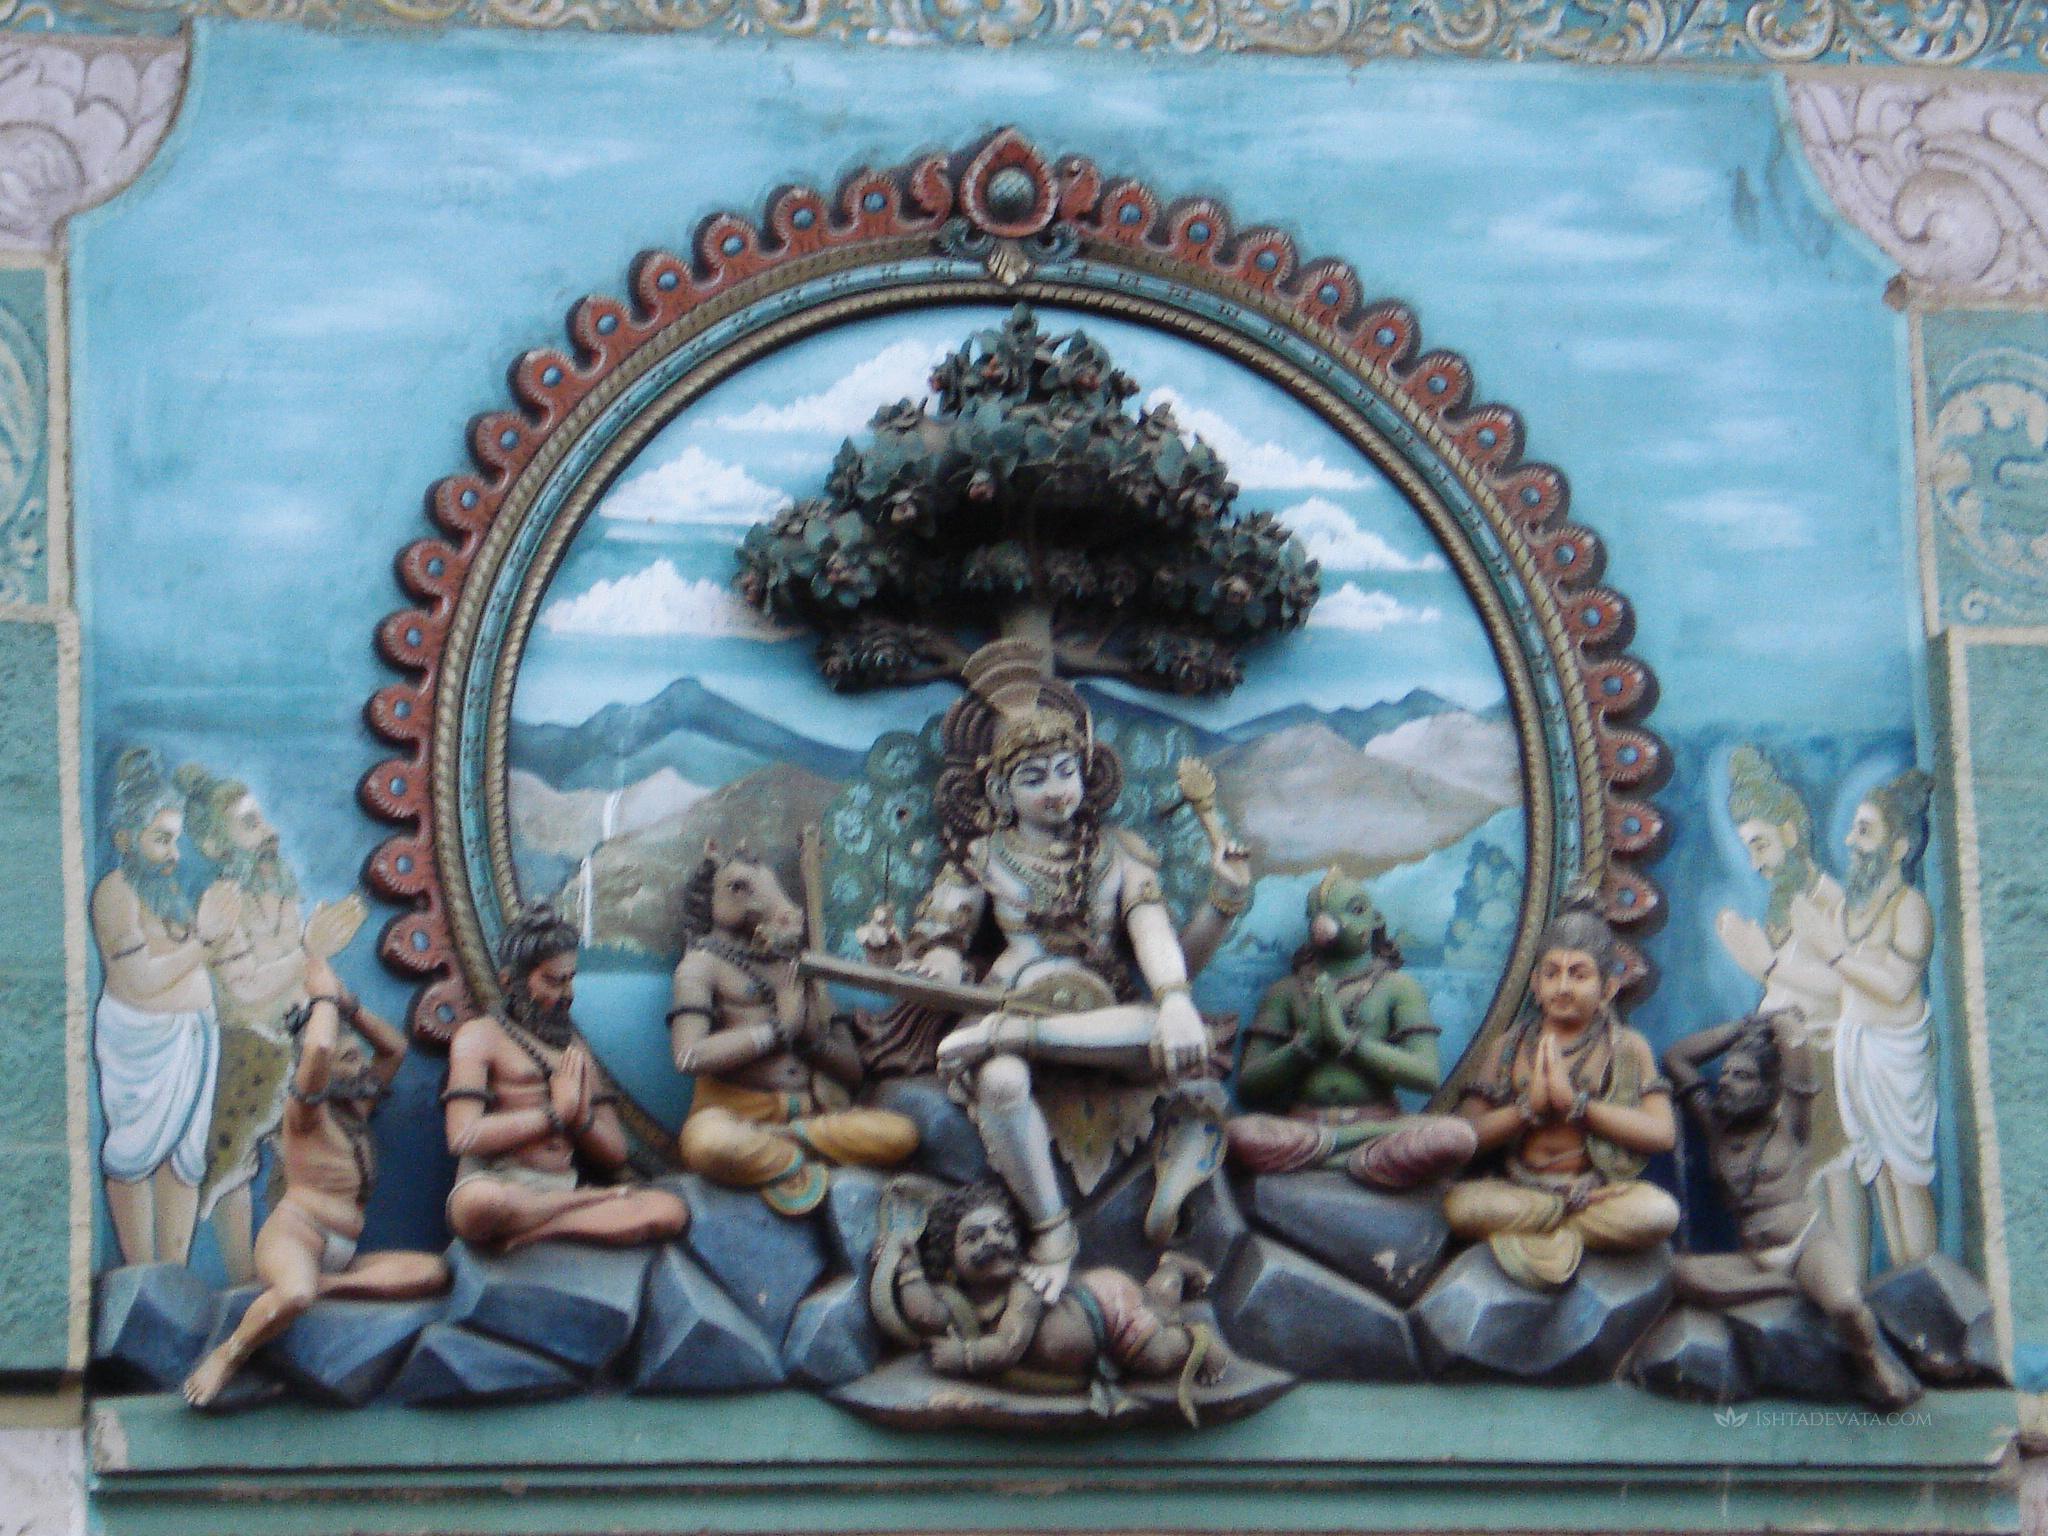 22-goddess-saraswati